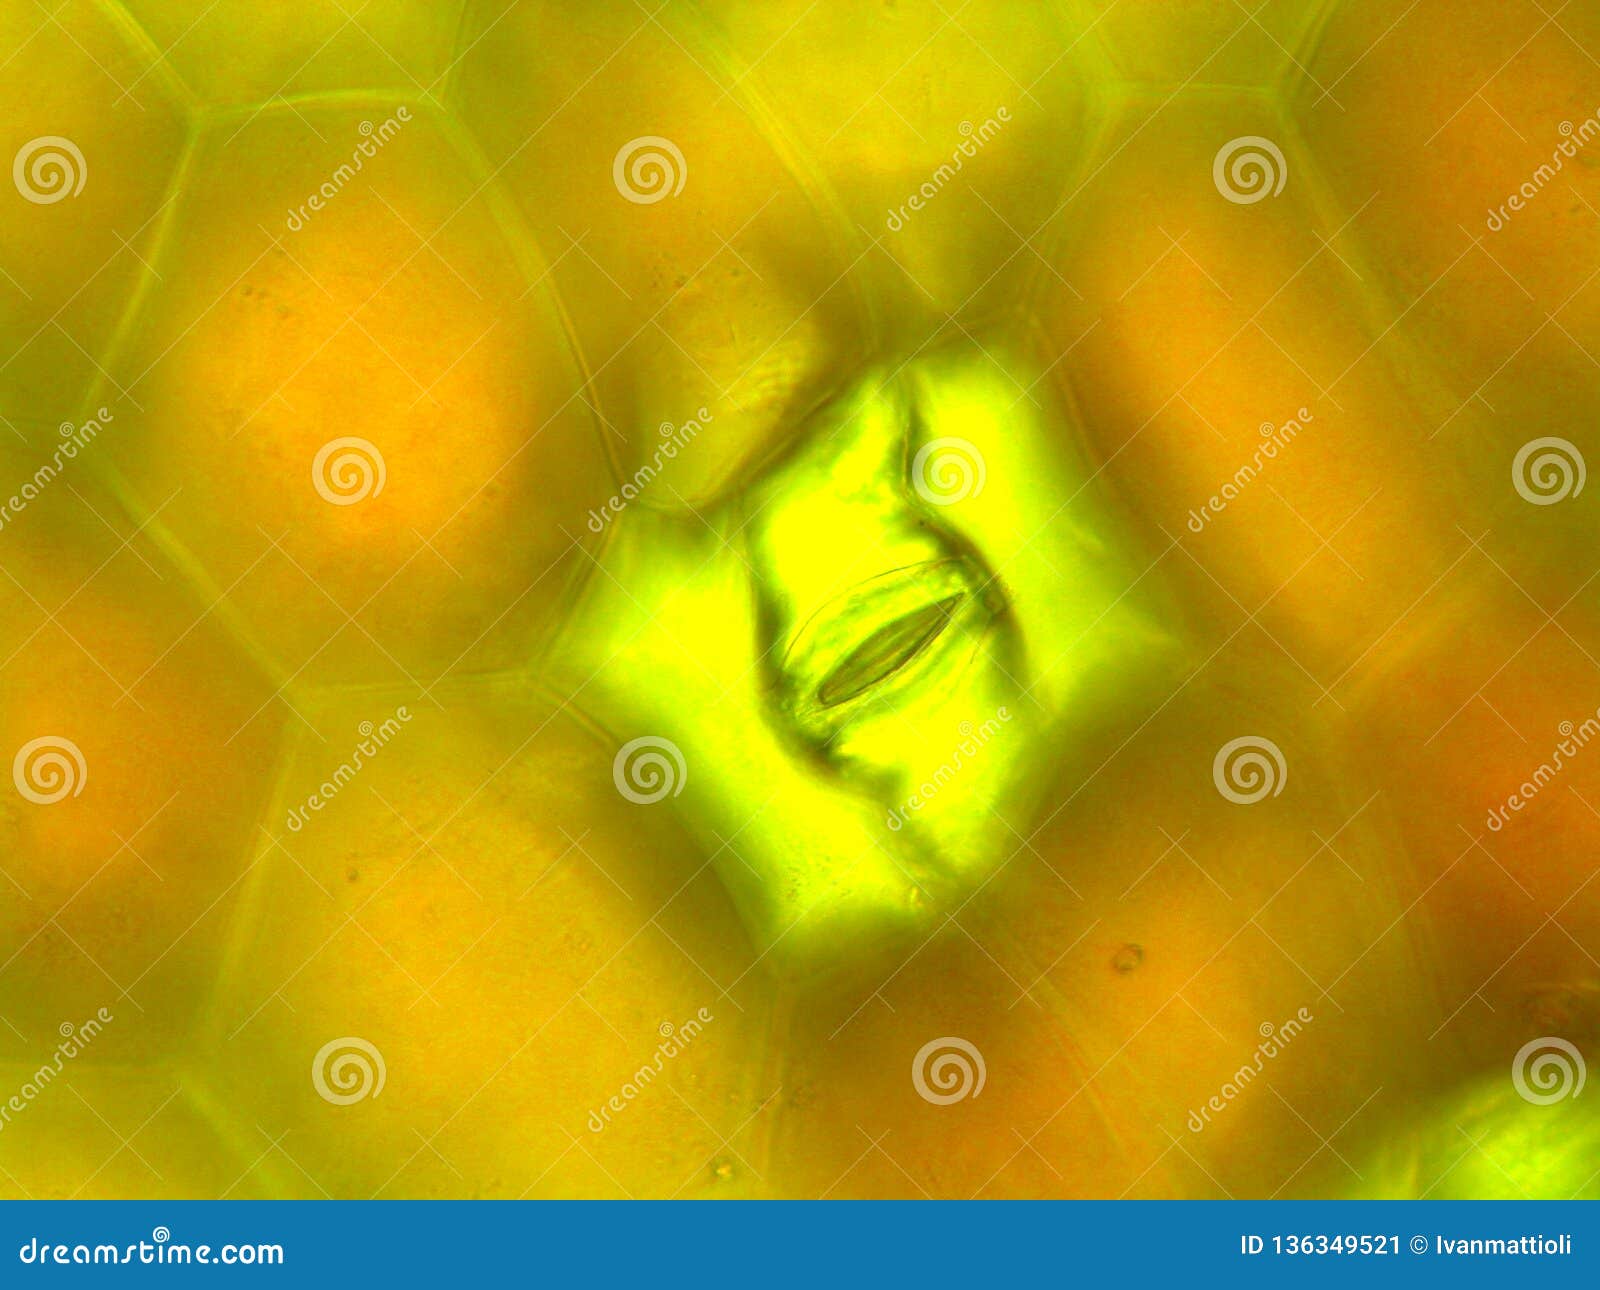 microscopic photograph of under side of zebrina pendula leaf showing stoma